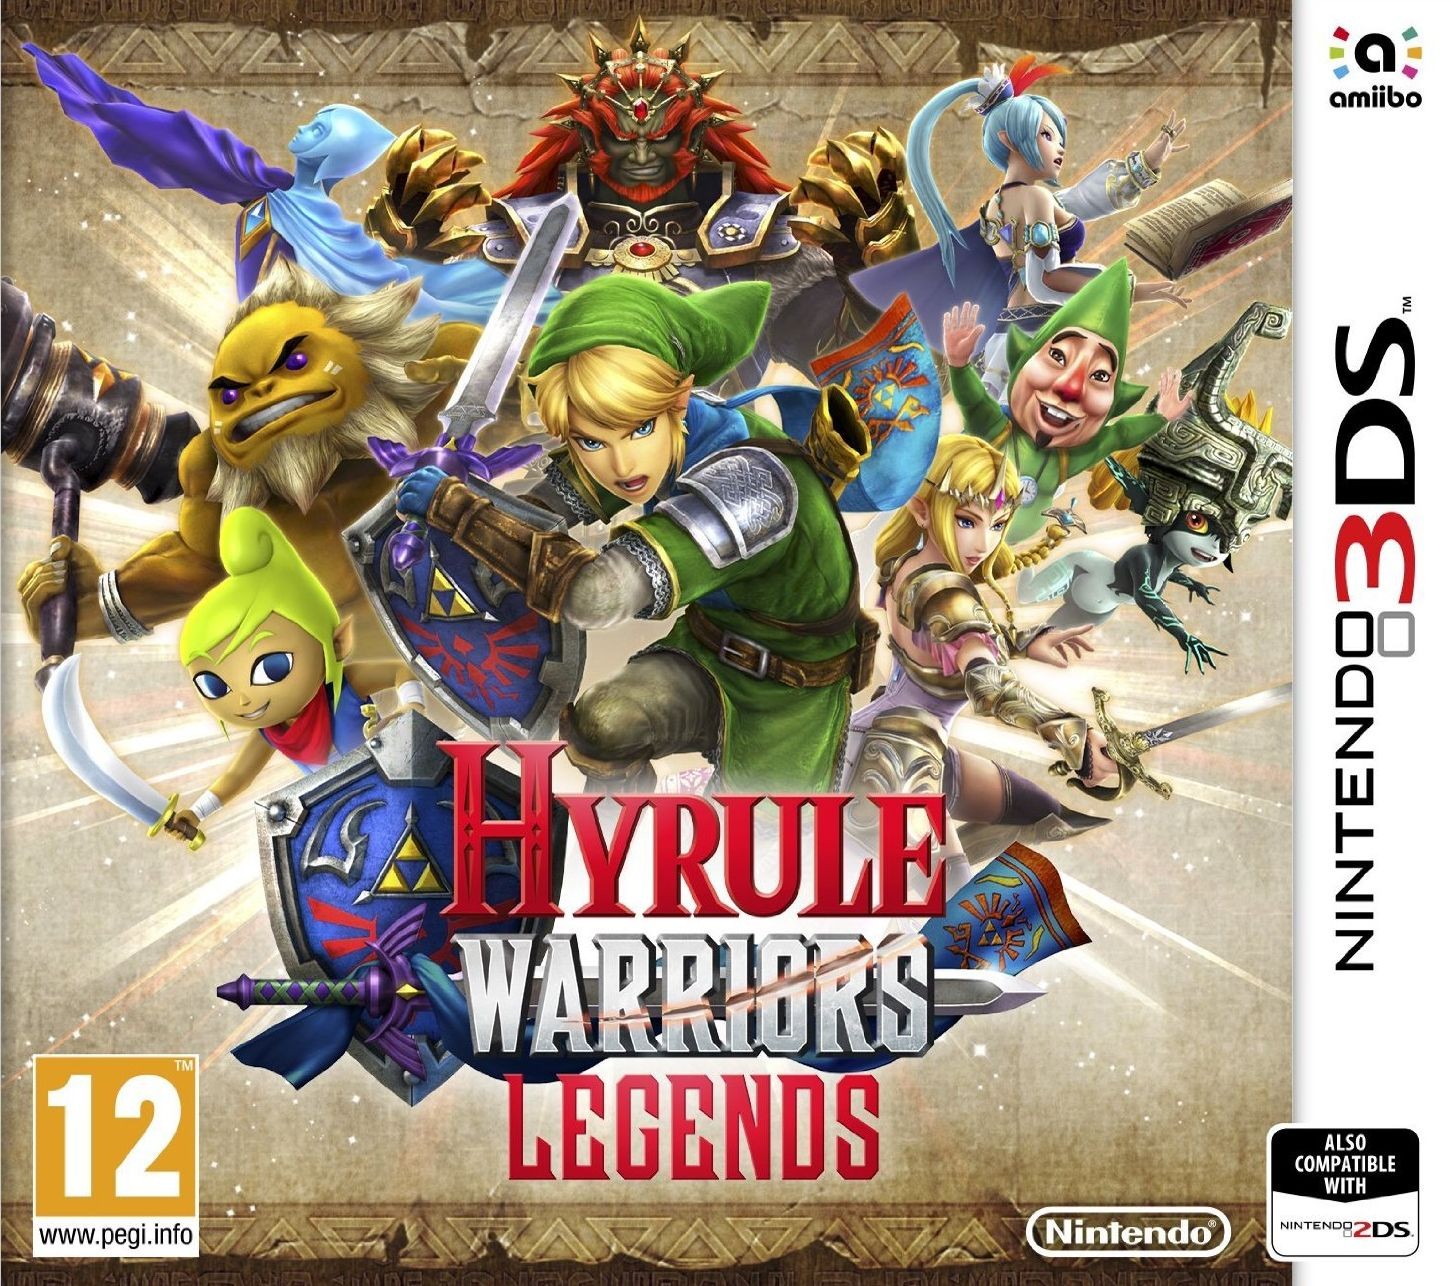 Hyrule Warriors Legends (3DS)